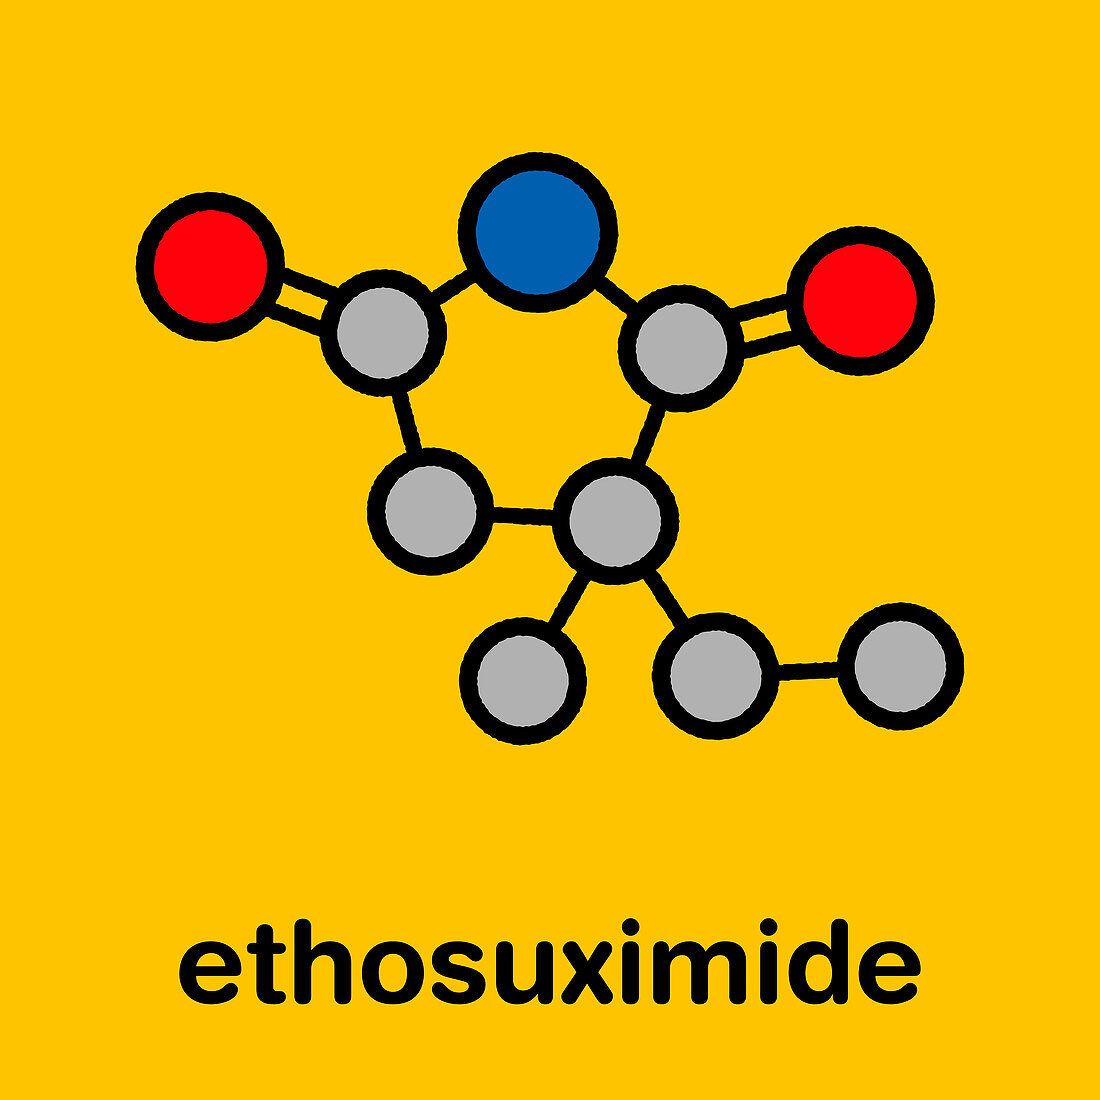 Ethosuximide anticonvulsant drug, molecular model